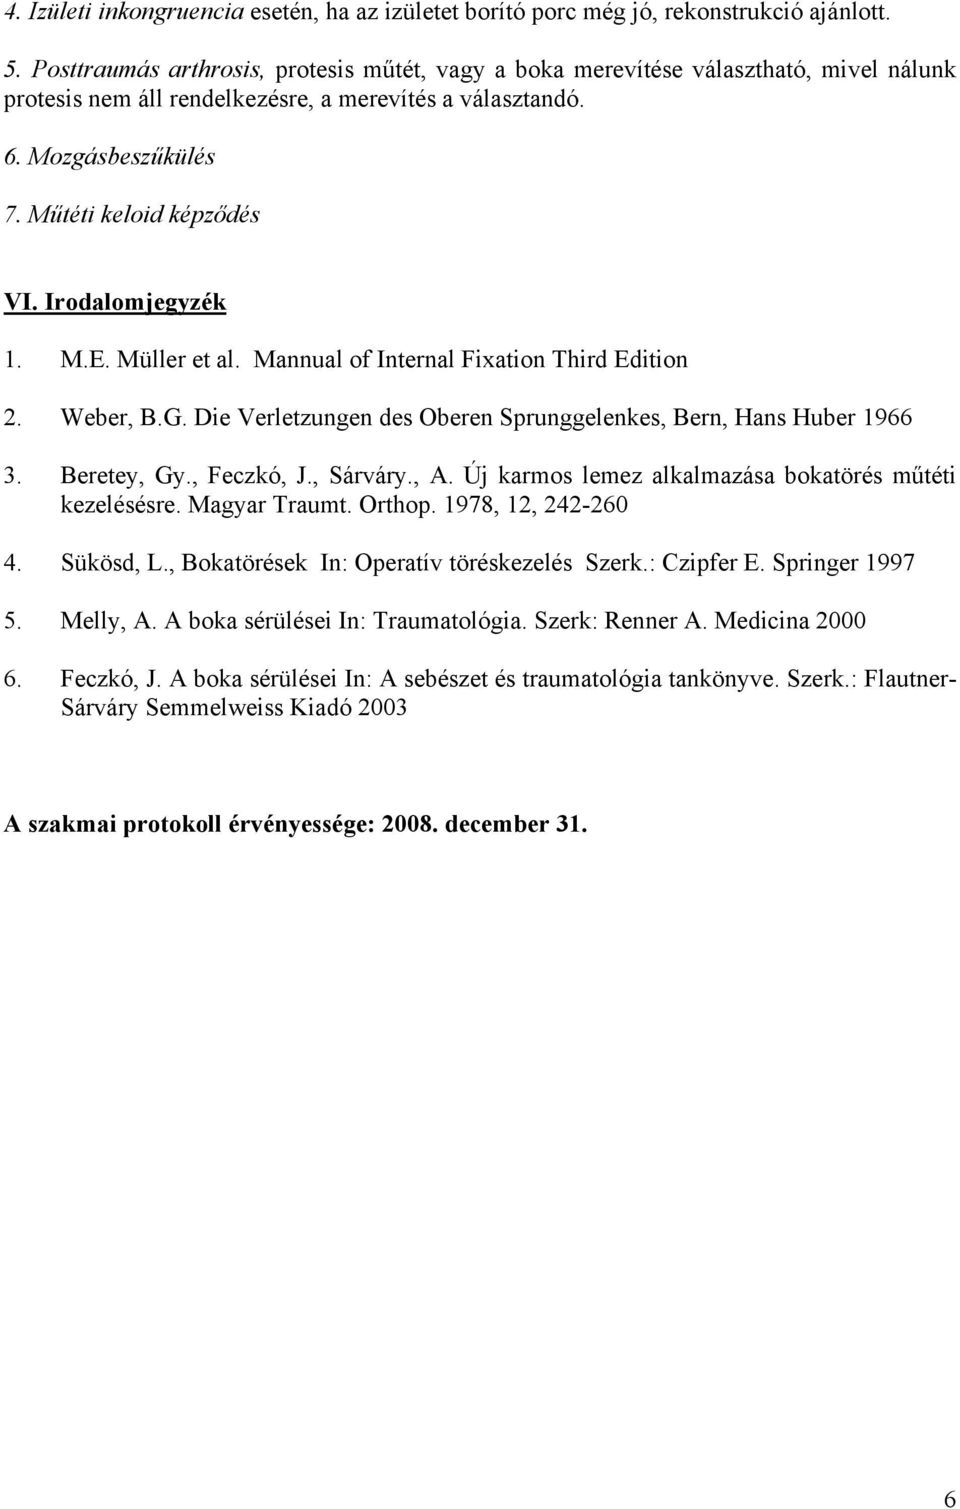 Irodalomjegyzék 1. M.E. Müller et al. Mannual of Internal Fixation Third Edition 2. Weber, B.G. Die Verletzungen des Oberen Sprunggelenkes, Bern, Hans Huber 1966 3. Beretey, Gy., Feczkó, J., Sárváry.